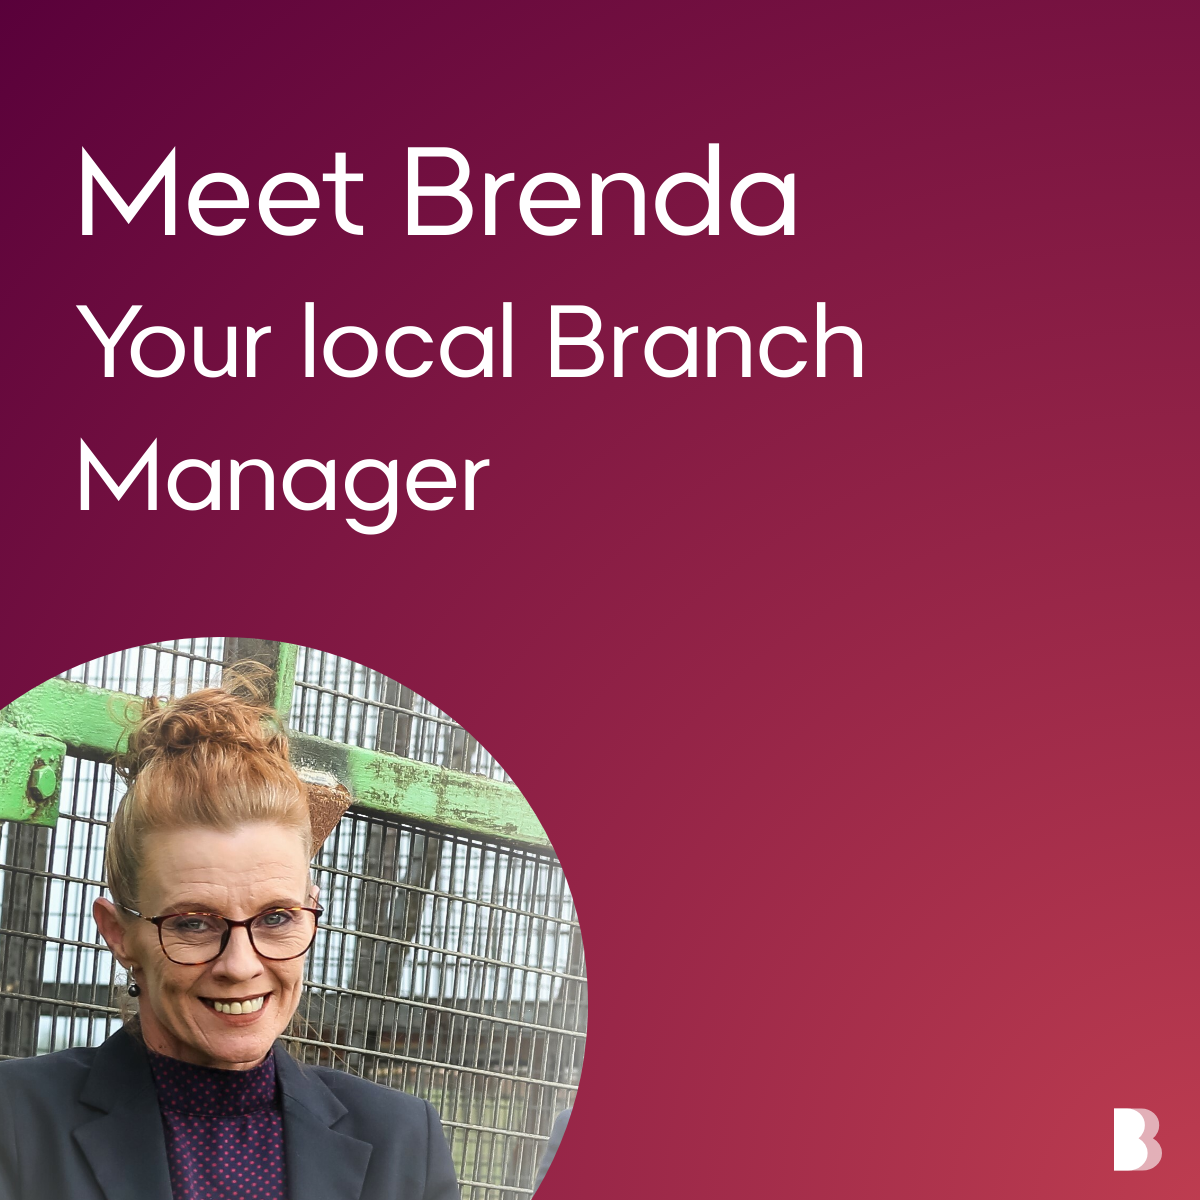 Brenda Taifalos – Snr Branch Manager, Bendigo Bank – Innisfail & Tully